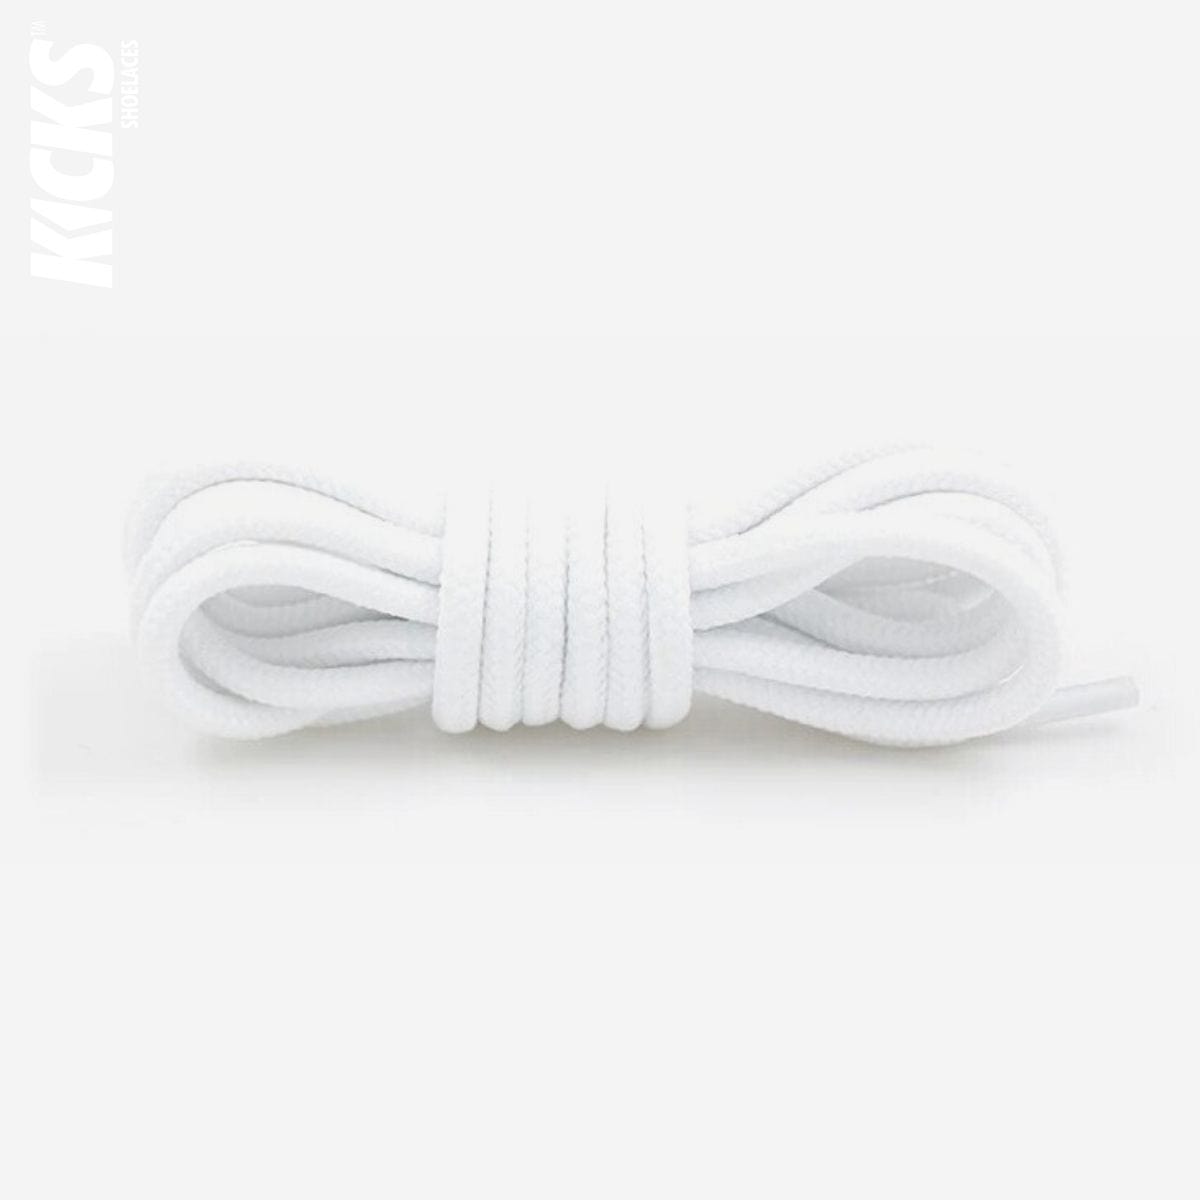 Air Max 95 Replacement Shoelaces - Kicks Shoelaces